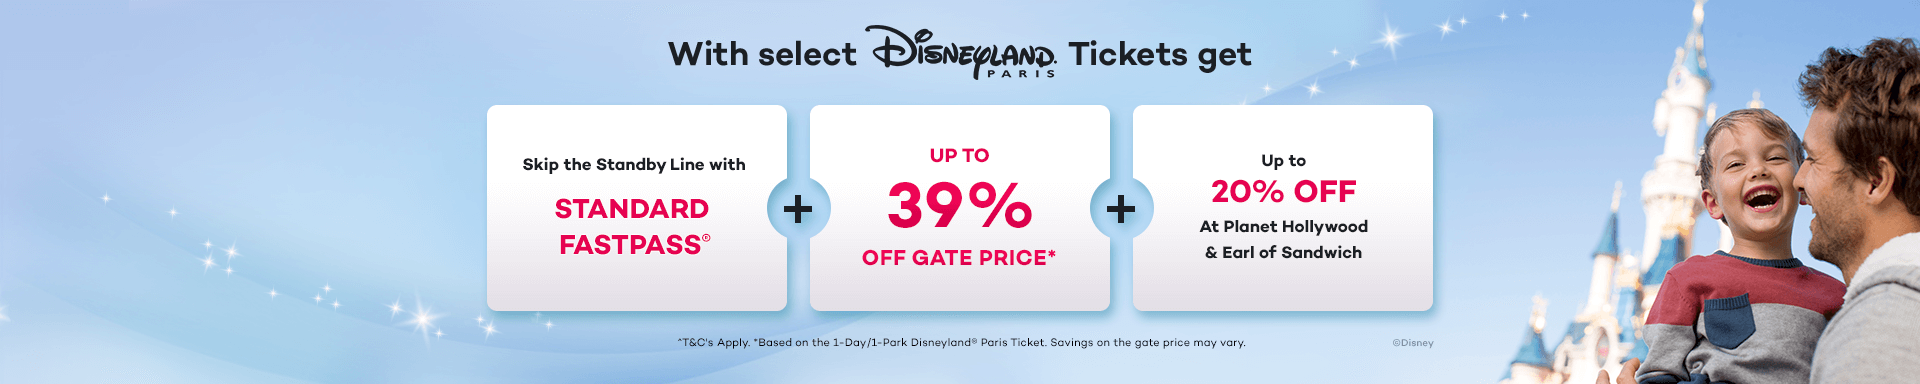 Disneyland Paris Tickets | Euro Disney Tickets, Deals and Offers